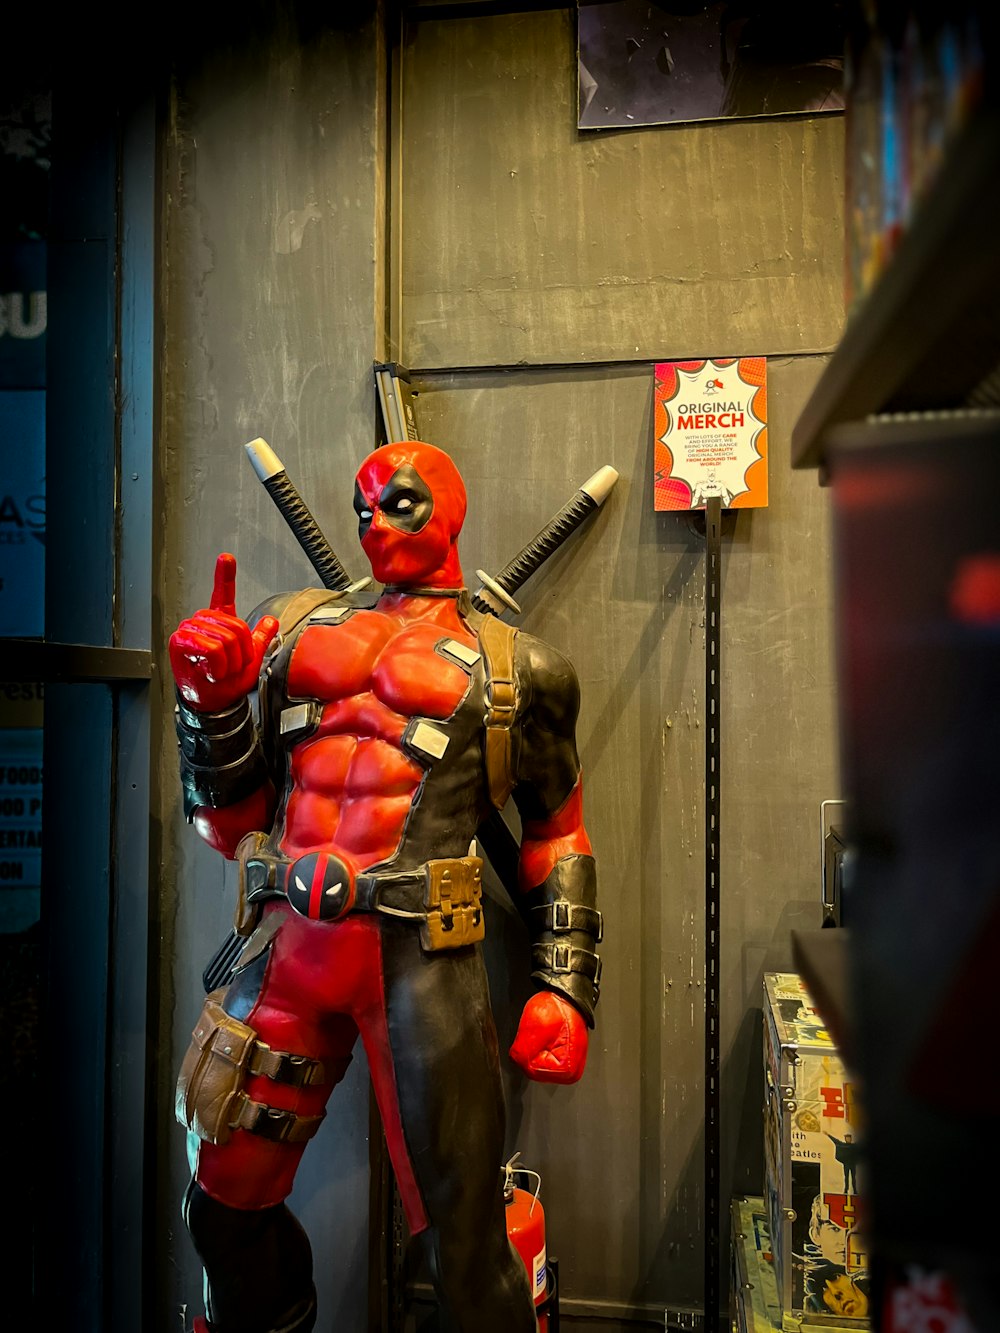 500+ Deadpool Pictures  Download Free Images on Unsplash